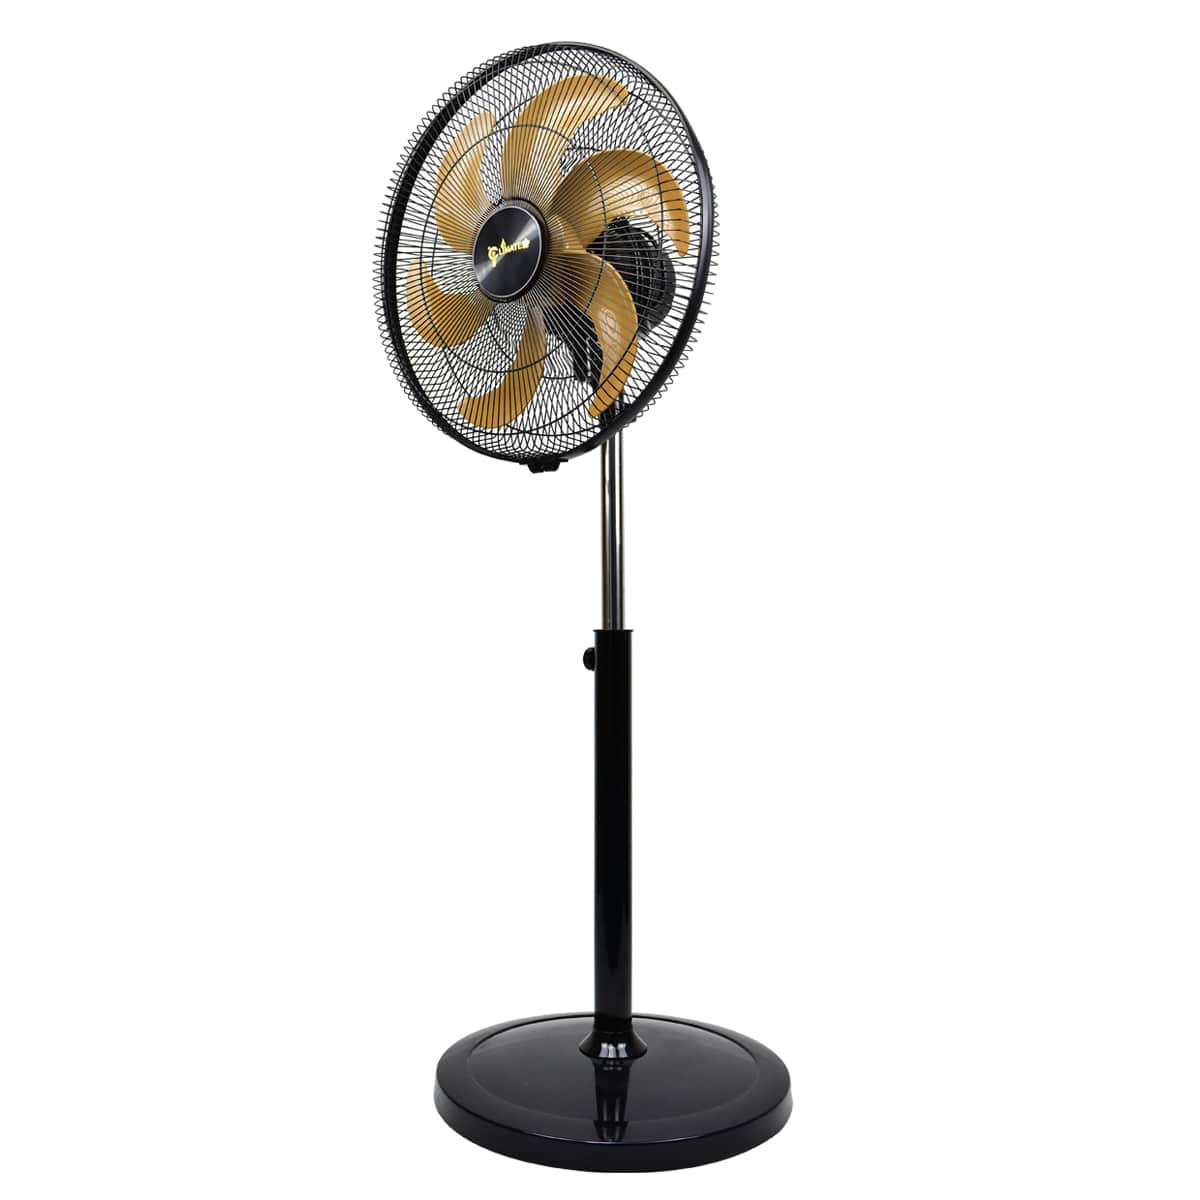 18” BLDC brushless pedestal fan